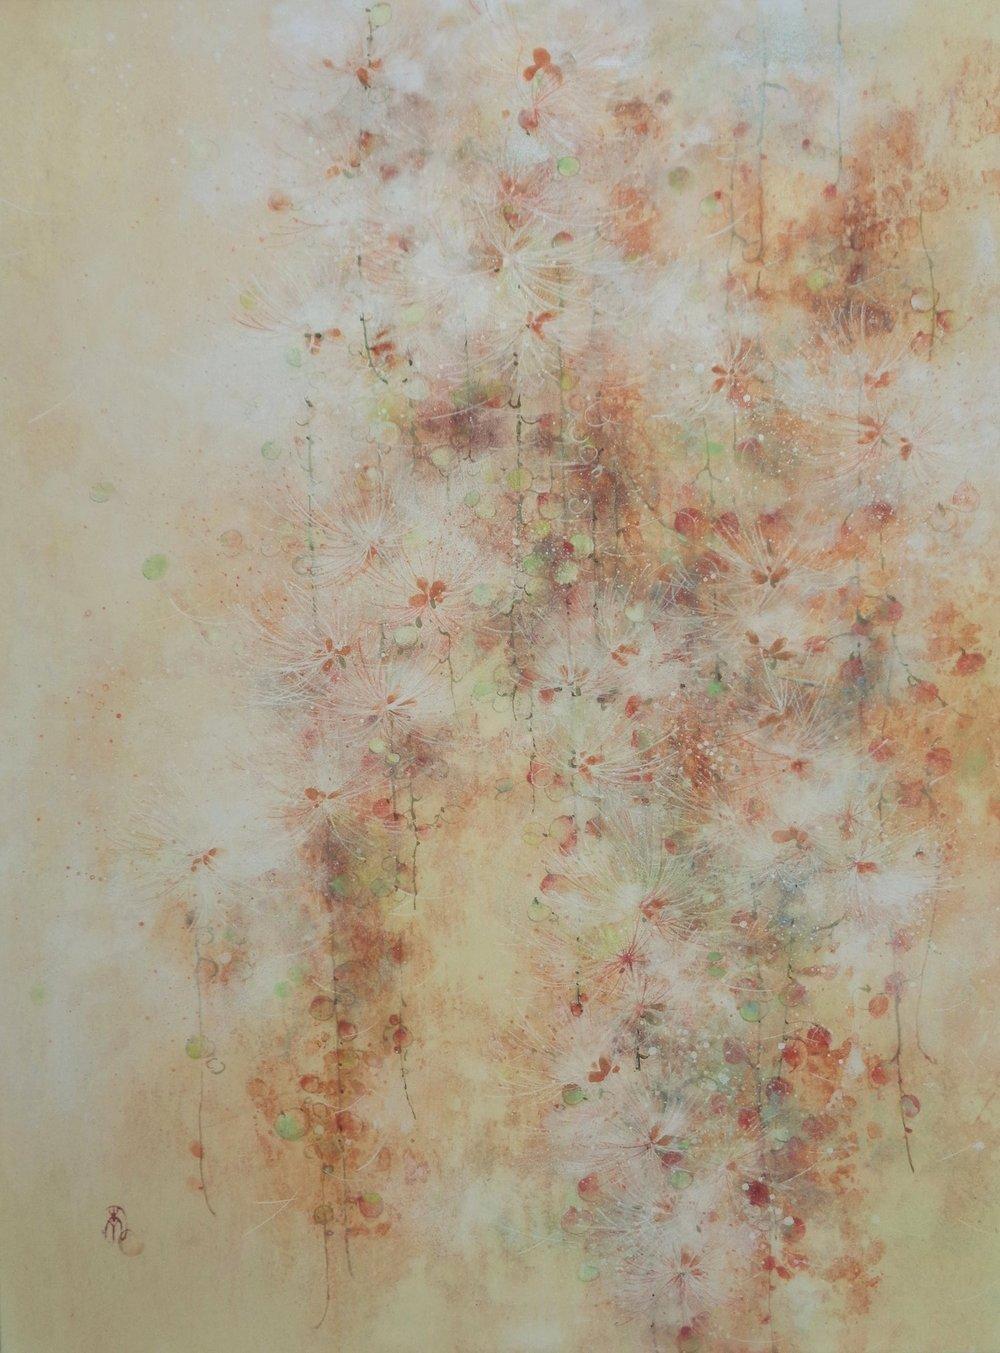 Flourishing by CHEN Yiching - Contemporary Nihonga painting, flowers